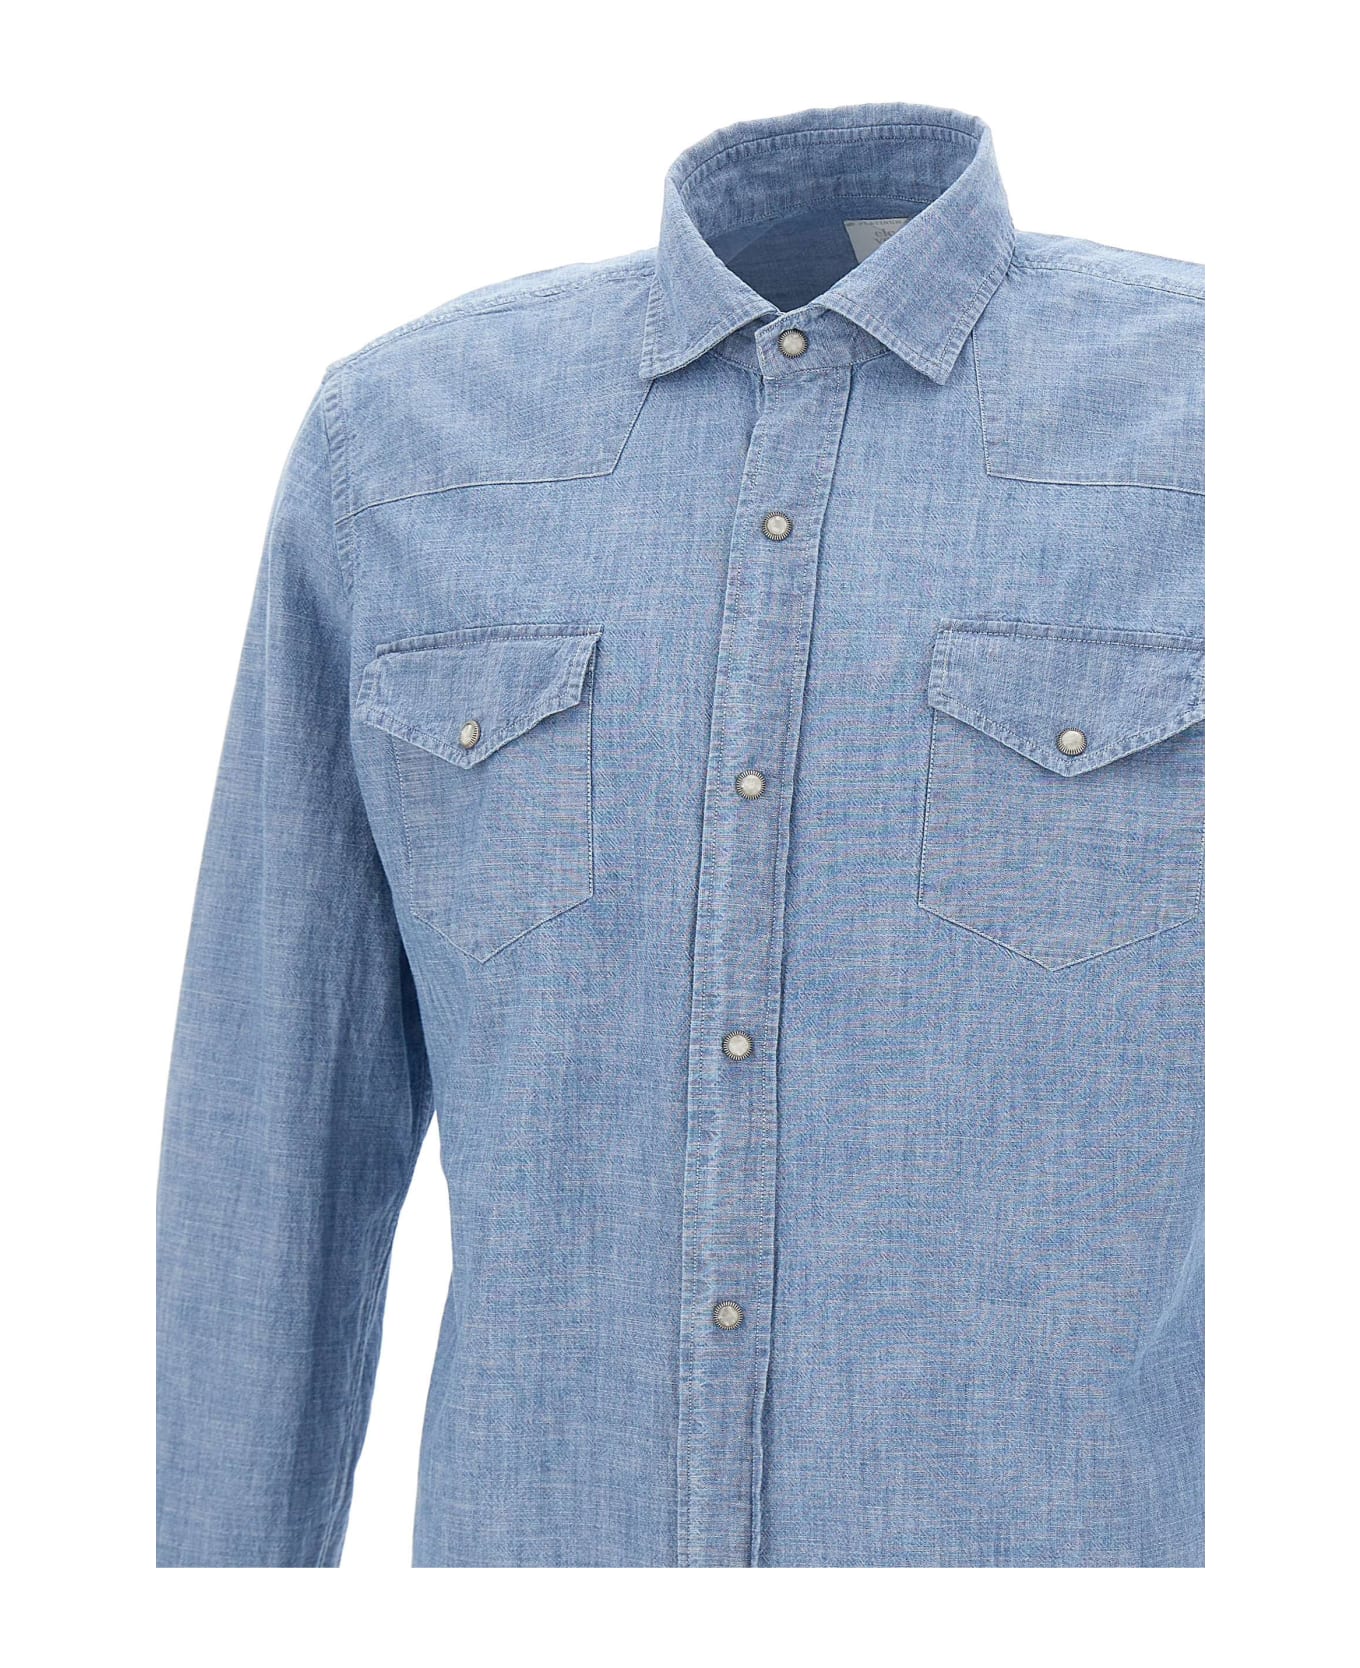 Eleventy Superfine Cotton Denim Shirt - LIGHT BLUE